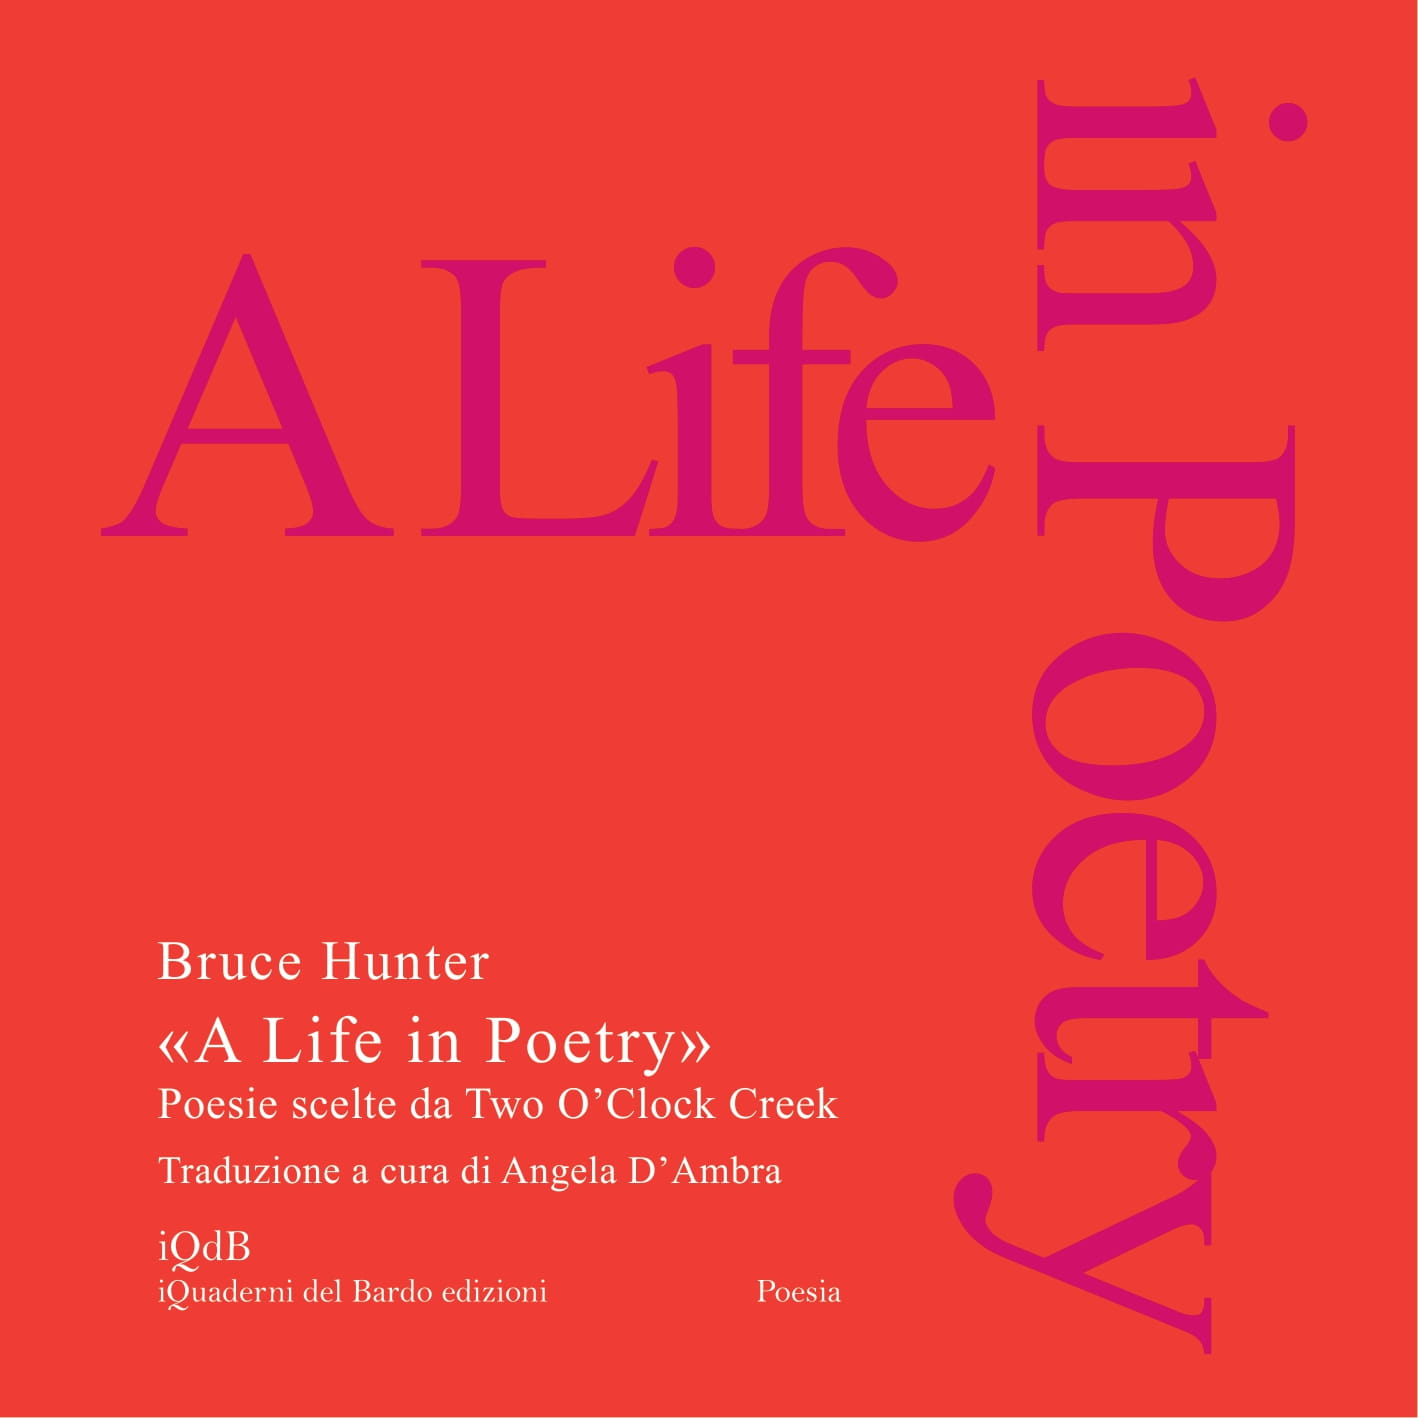 Esce la raccolta in versi A Life in Poetry del canadese Bruce Hunter